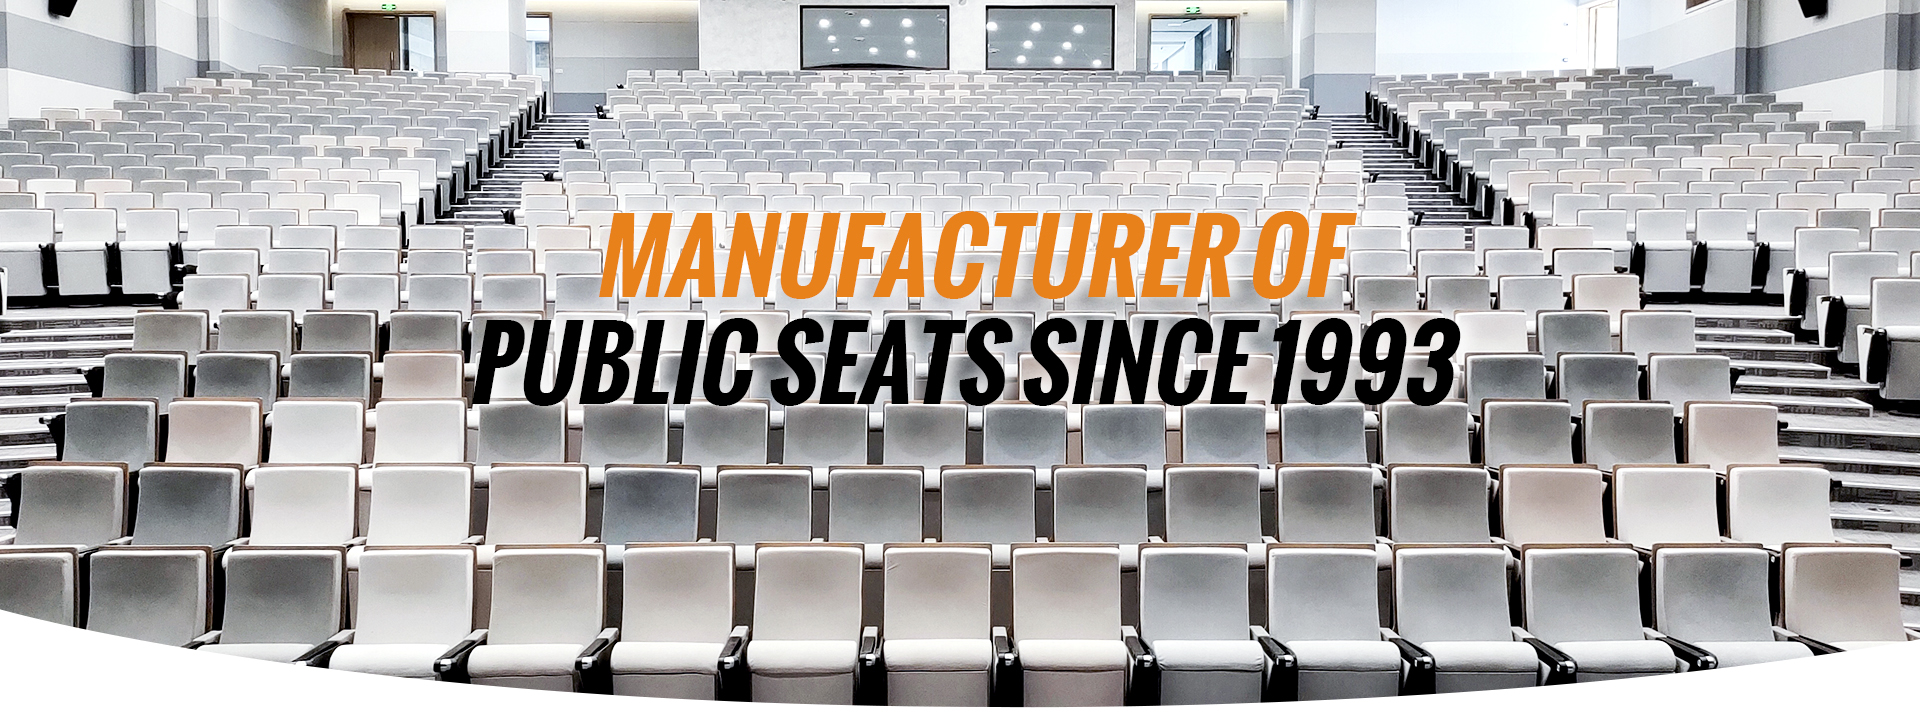 Manufacturer of Public Seats